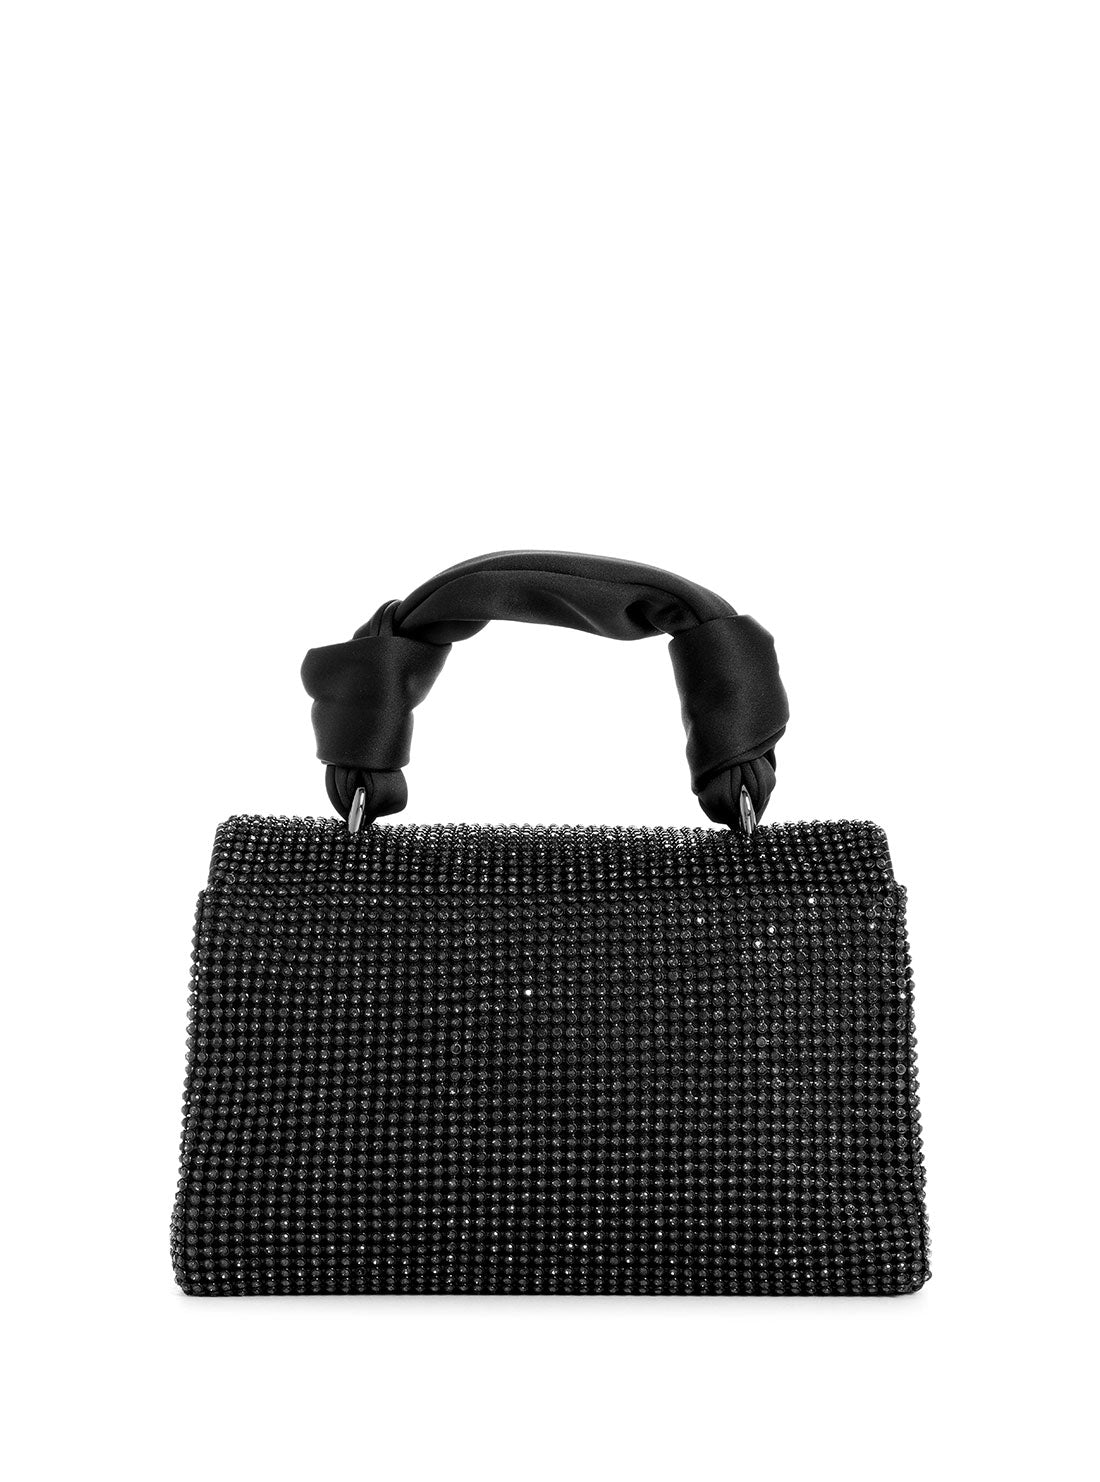 GUESS Black Lua Top Handle Flap Bag back view